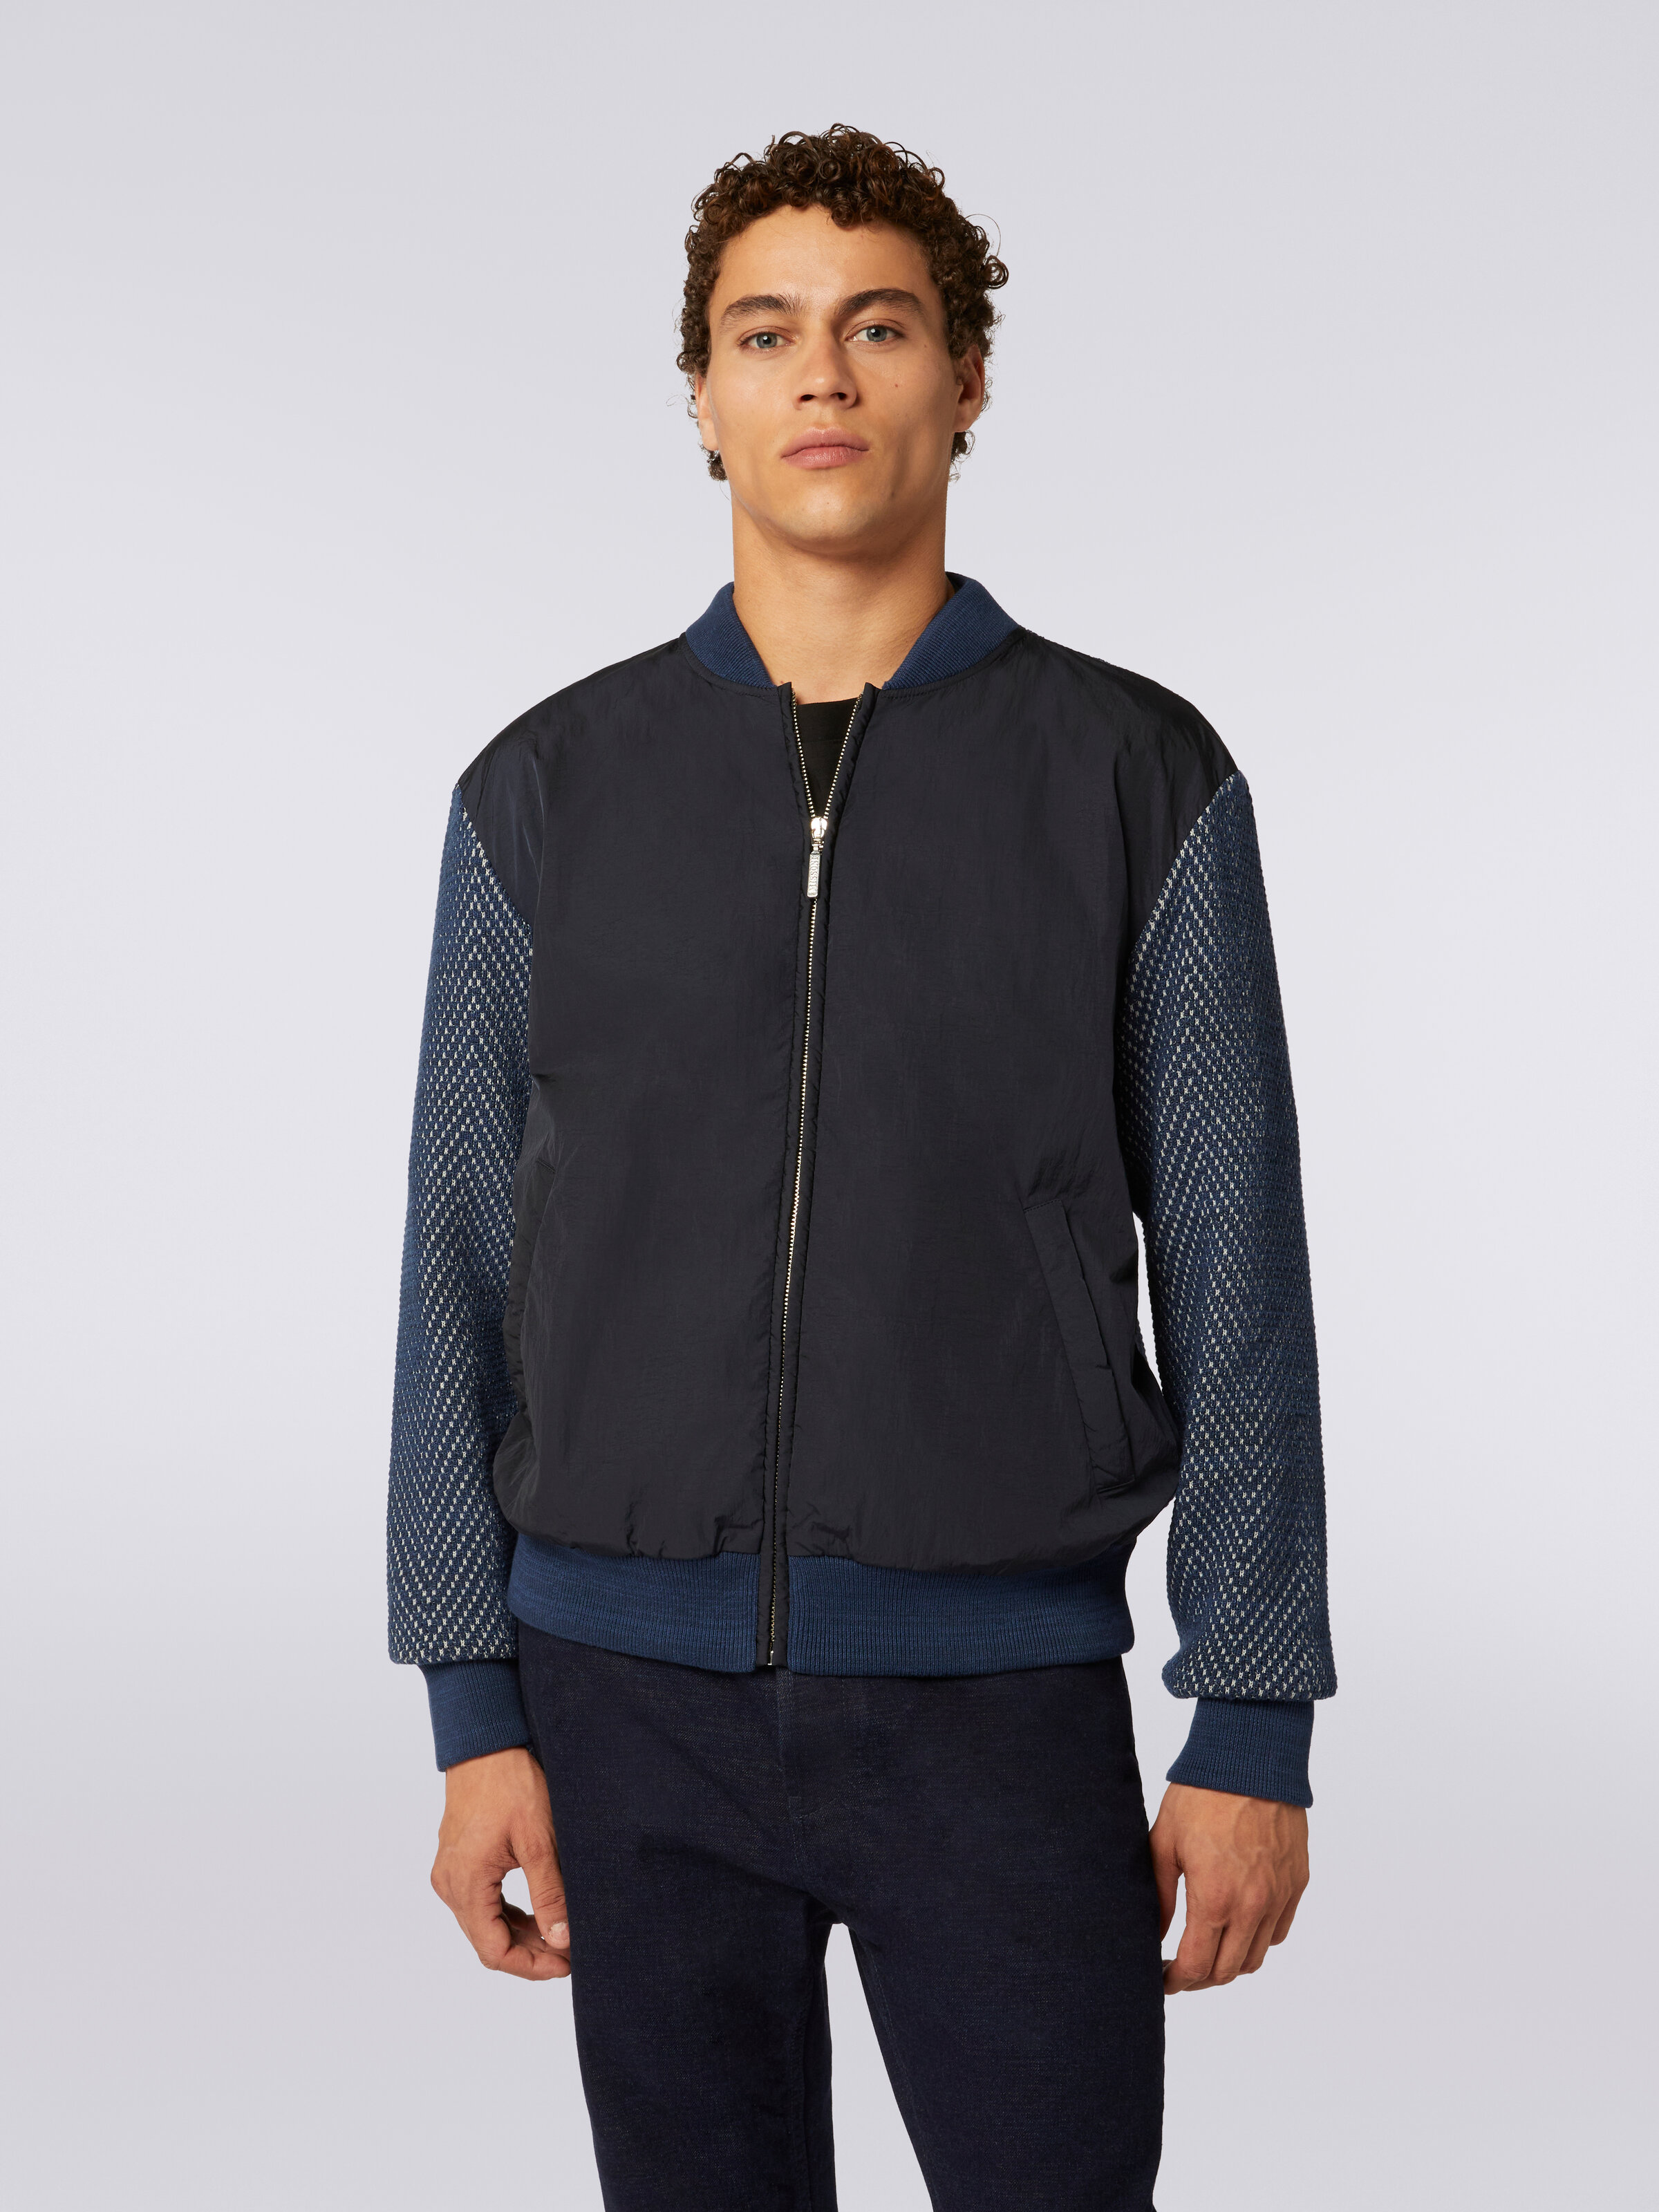 Cotton and nylon blend bomber jacket, Blue & Grey  - 4